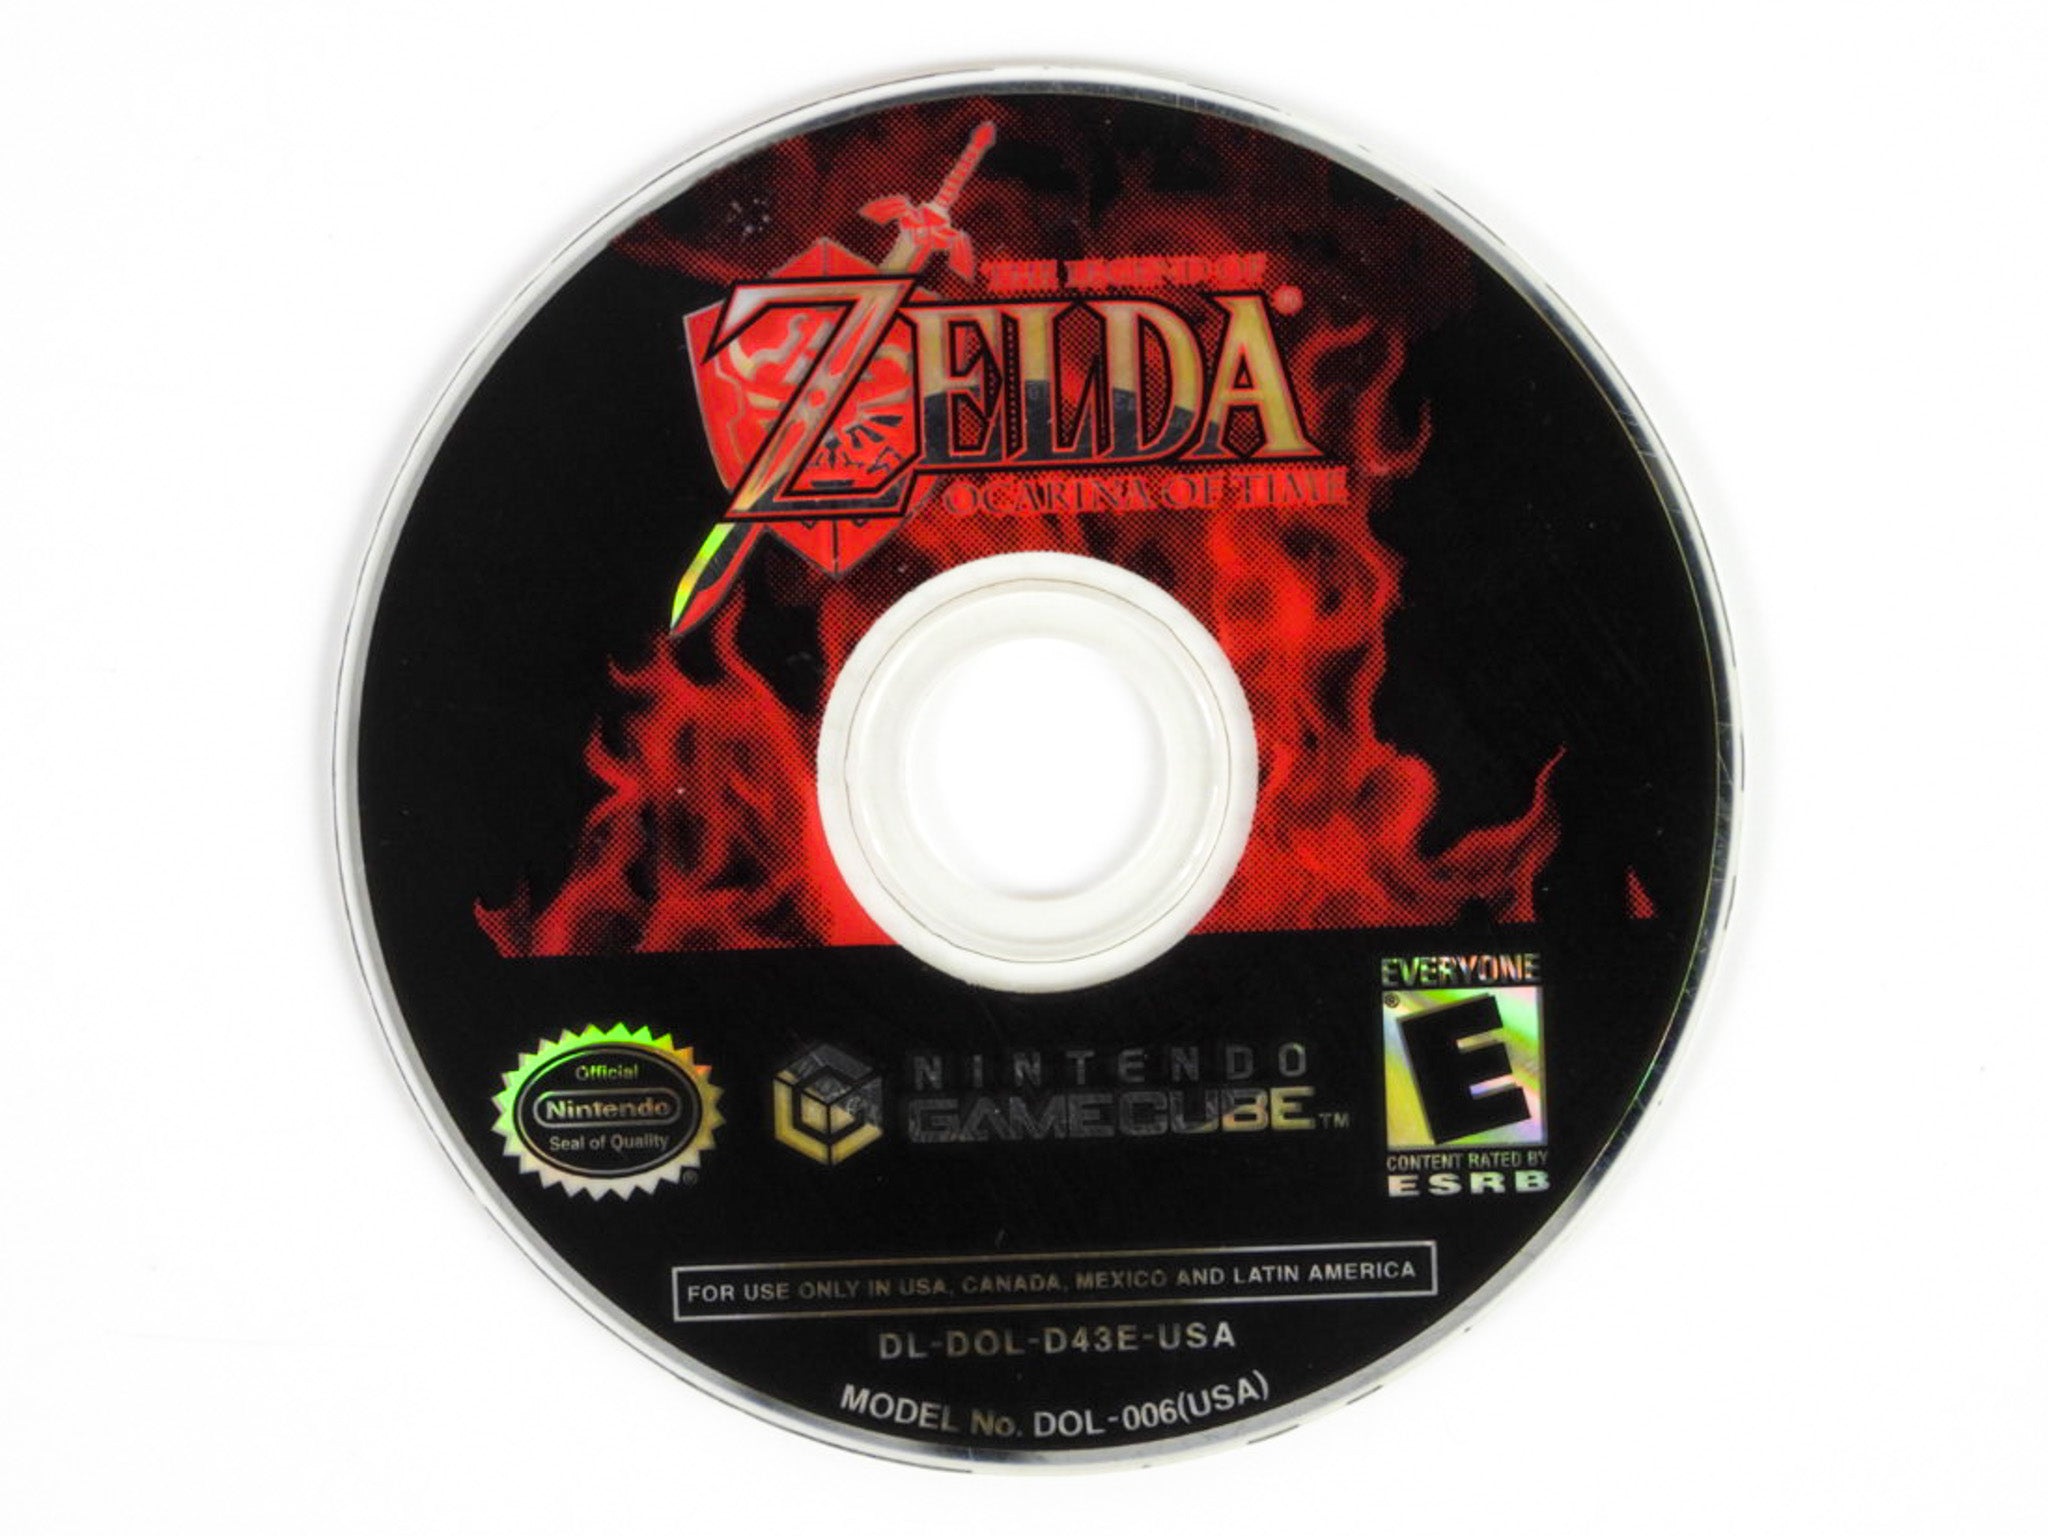 Legend of Zelda, The - Ocarina of Time Multi Pack (USA) Nintendo GameCube  (NGC) ISO Download - RomUlation